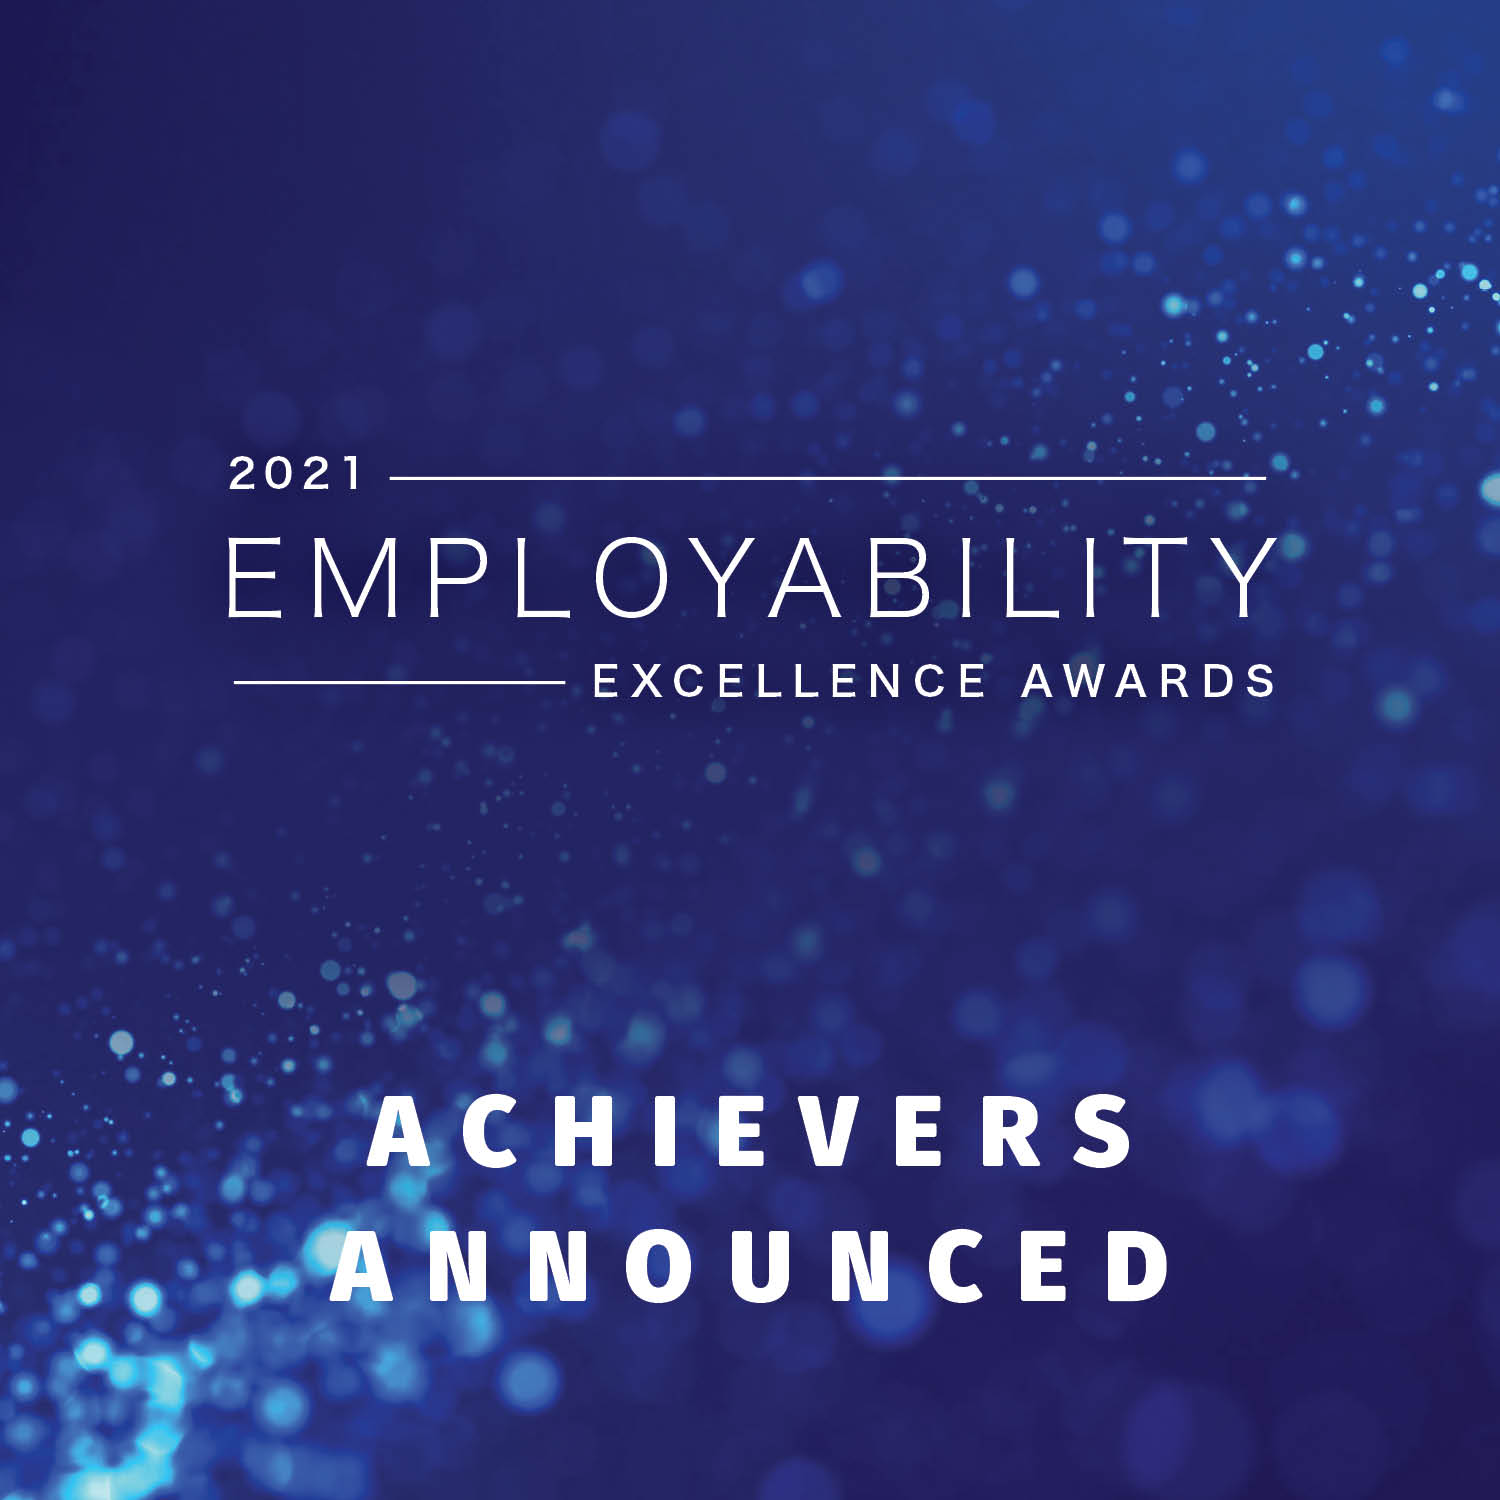 2021 Employability Excellence Awards